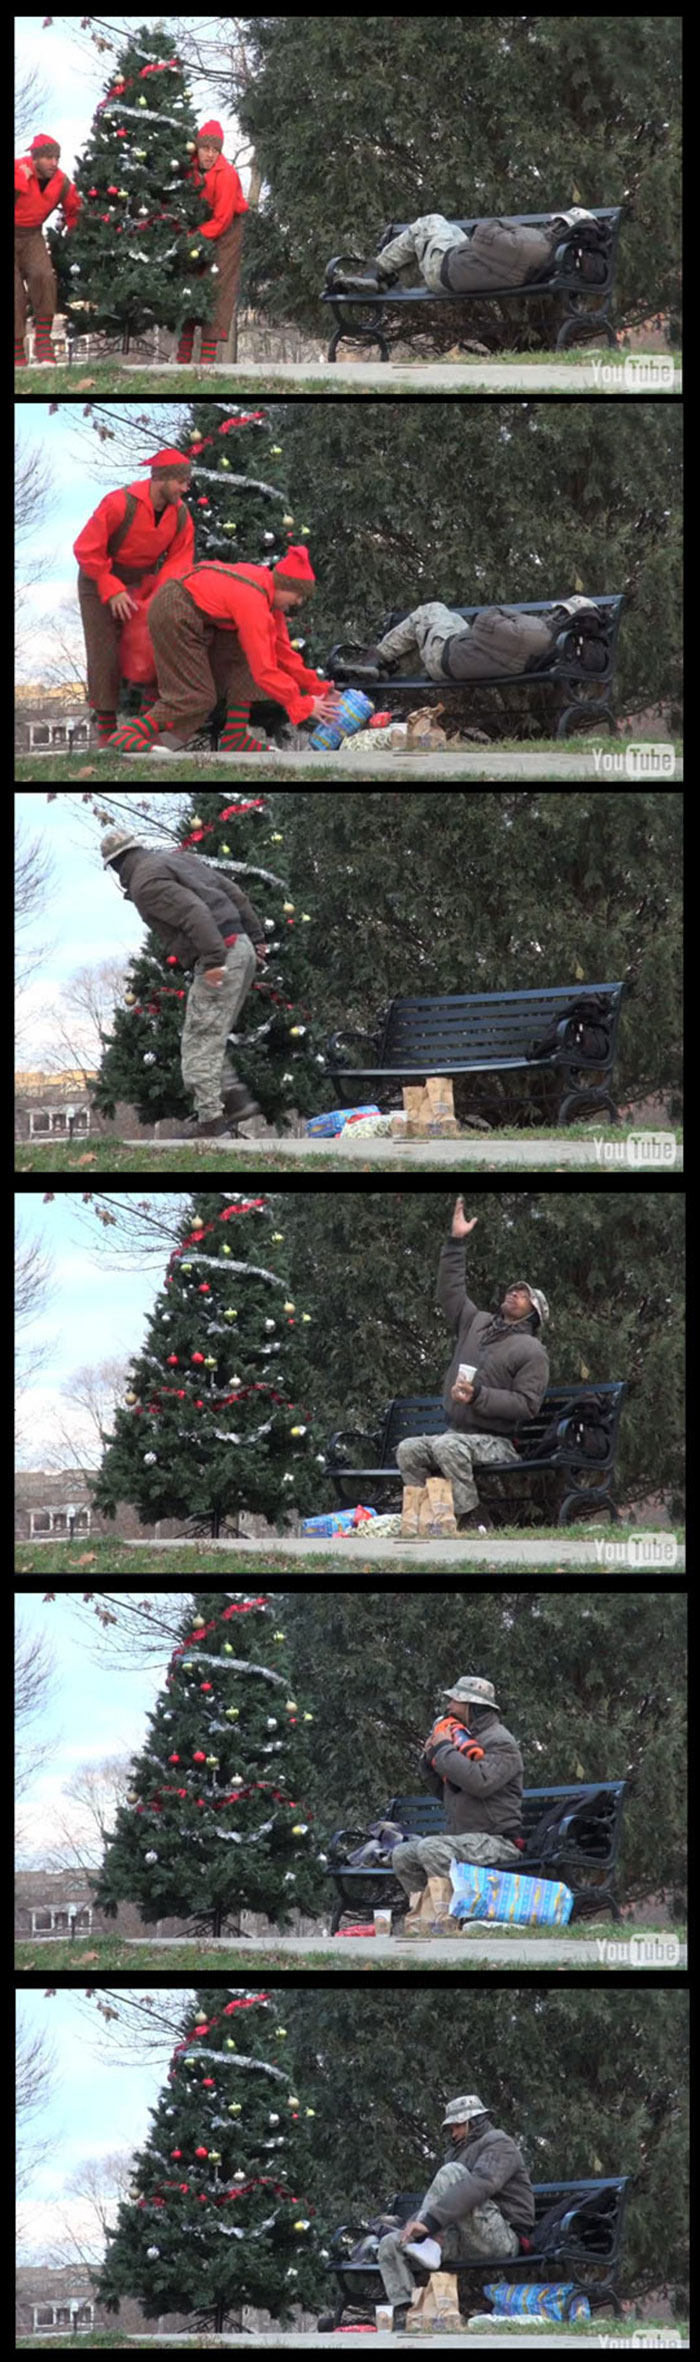 funny-homeless-Christmas-tree-gift-elf-costume